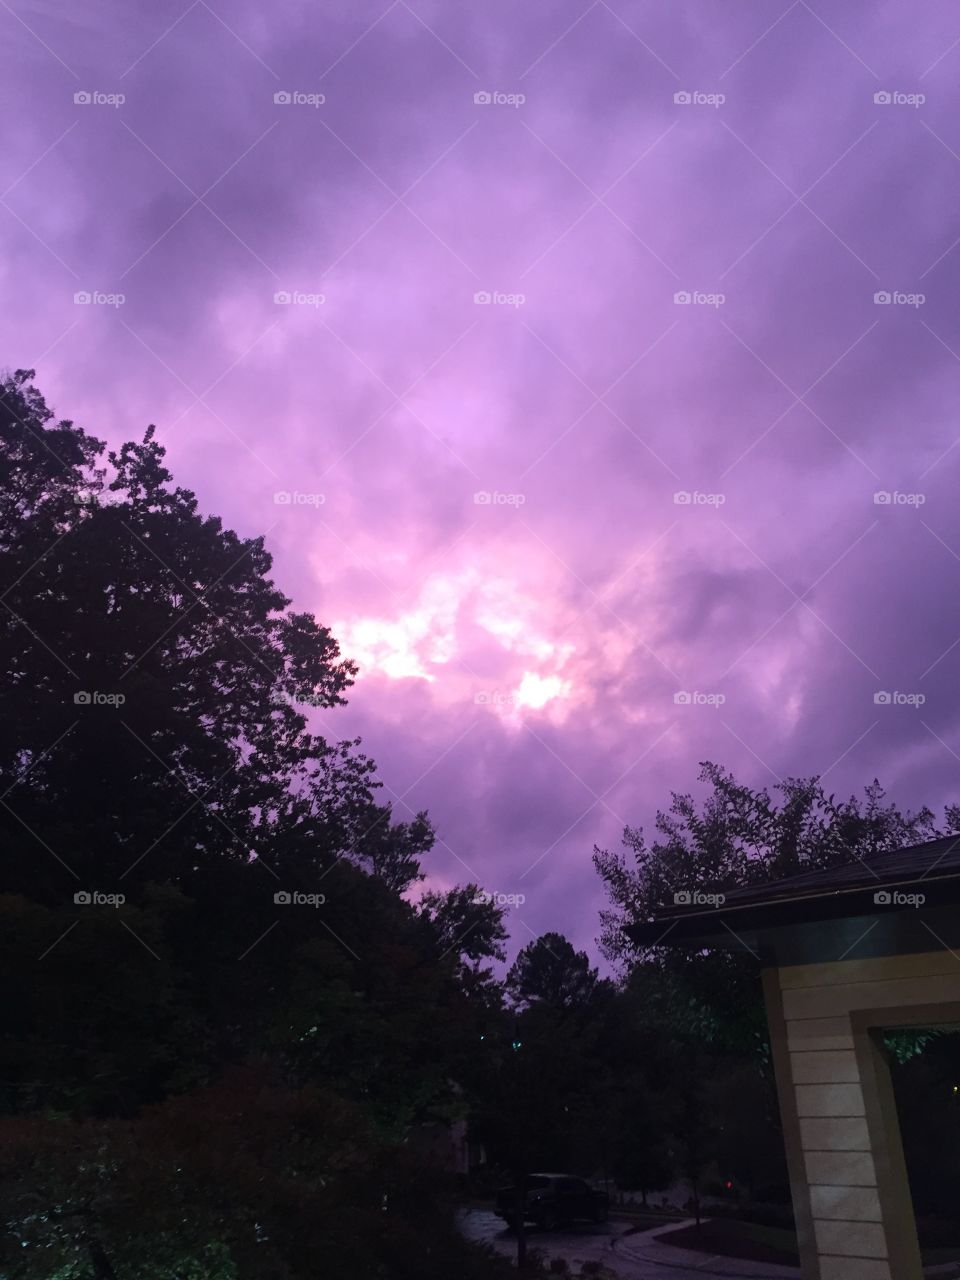 Stormy Skies/Sunset